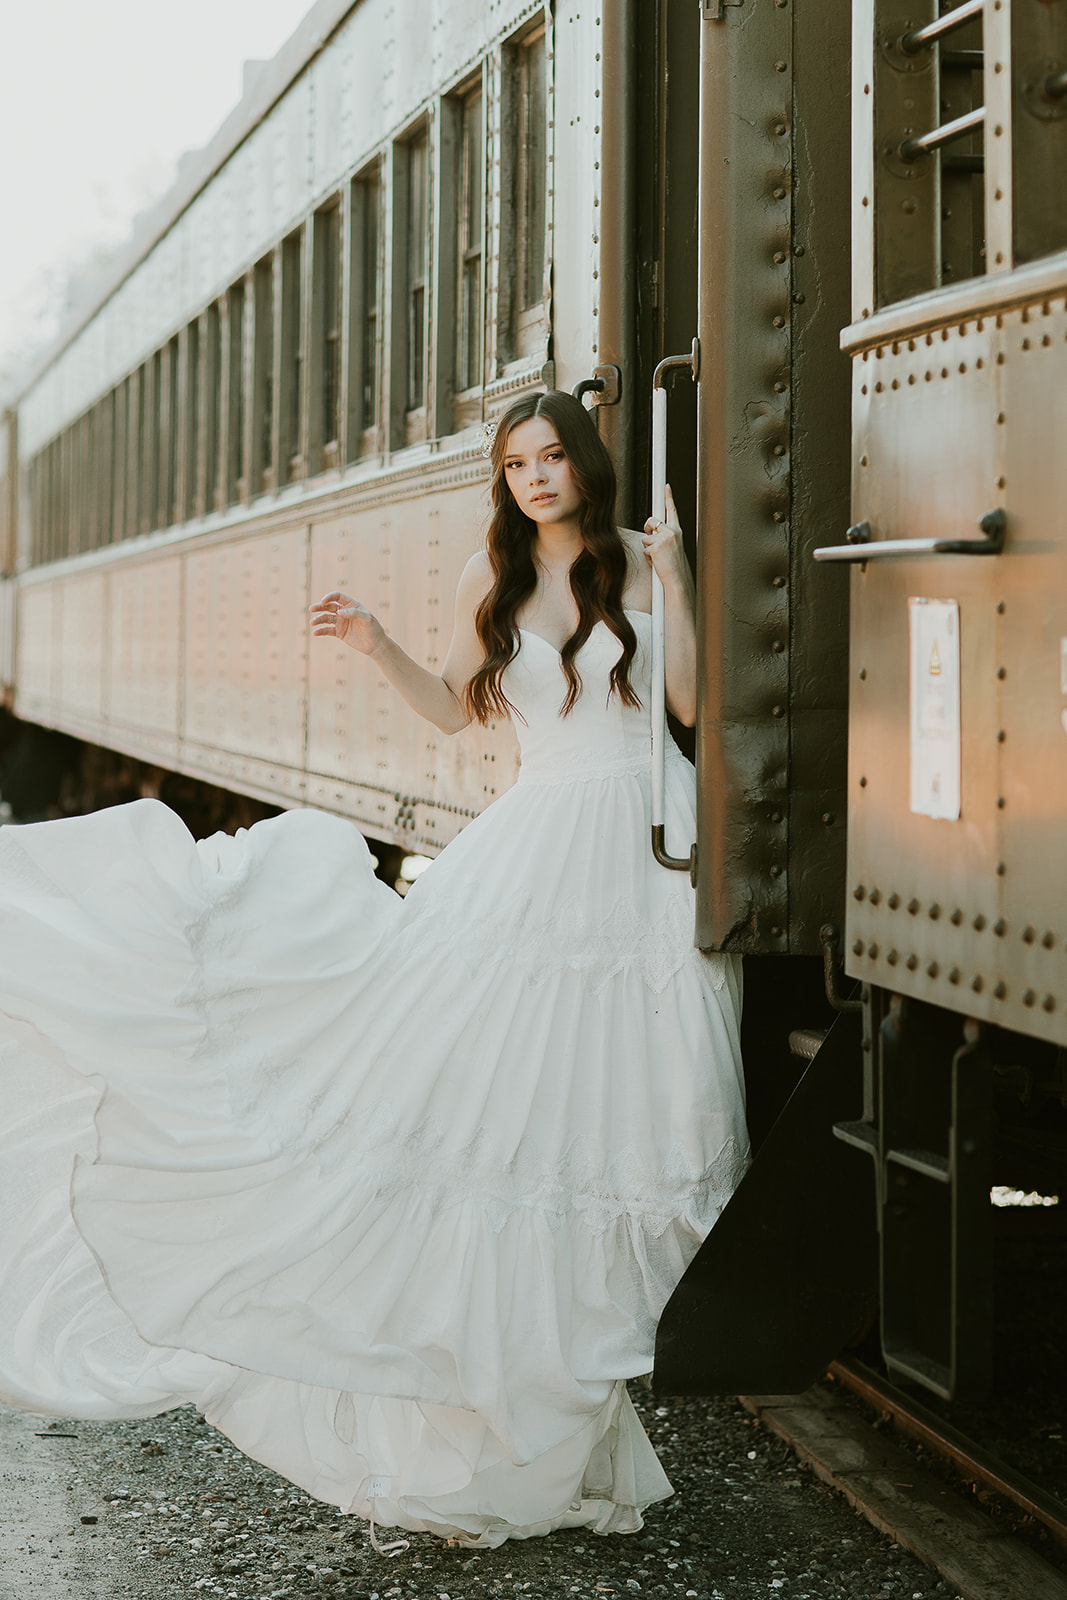 Wedding photo outside historic railcar